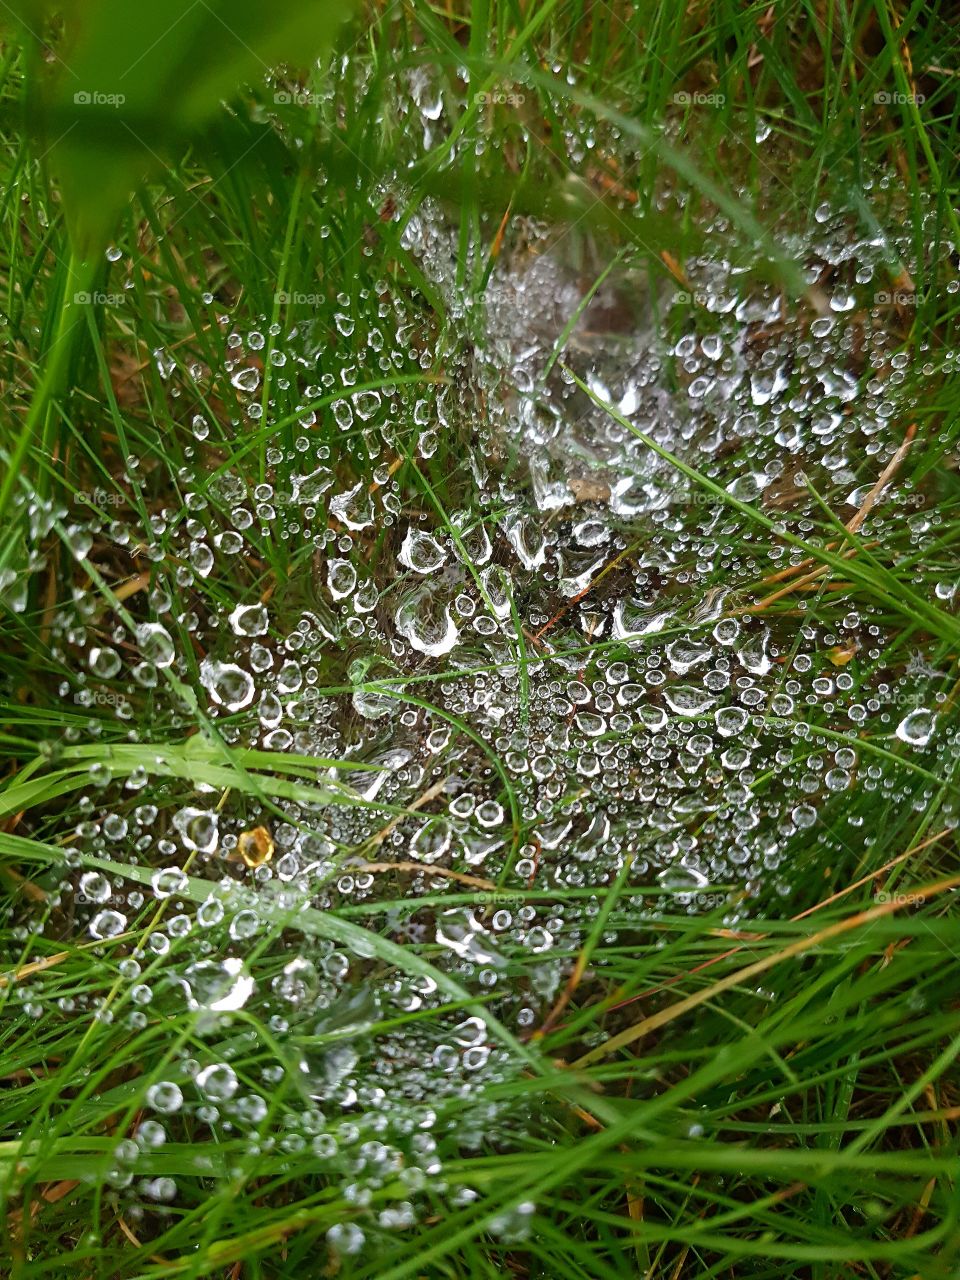 cobwebs in the rain